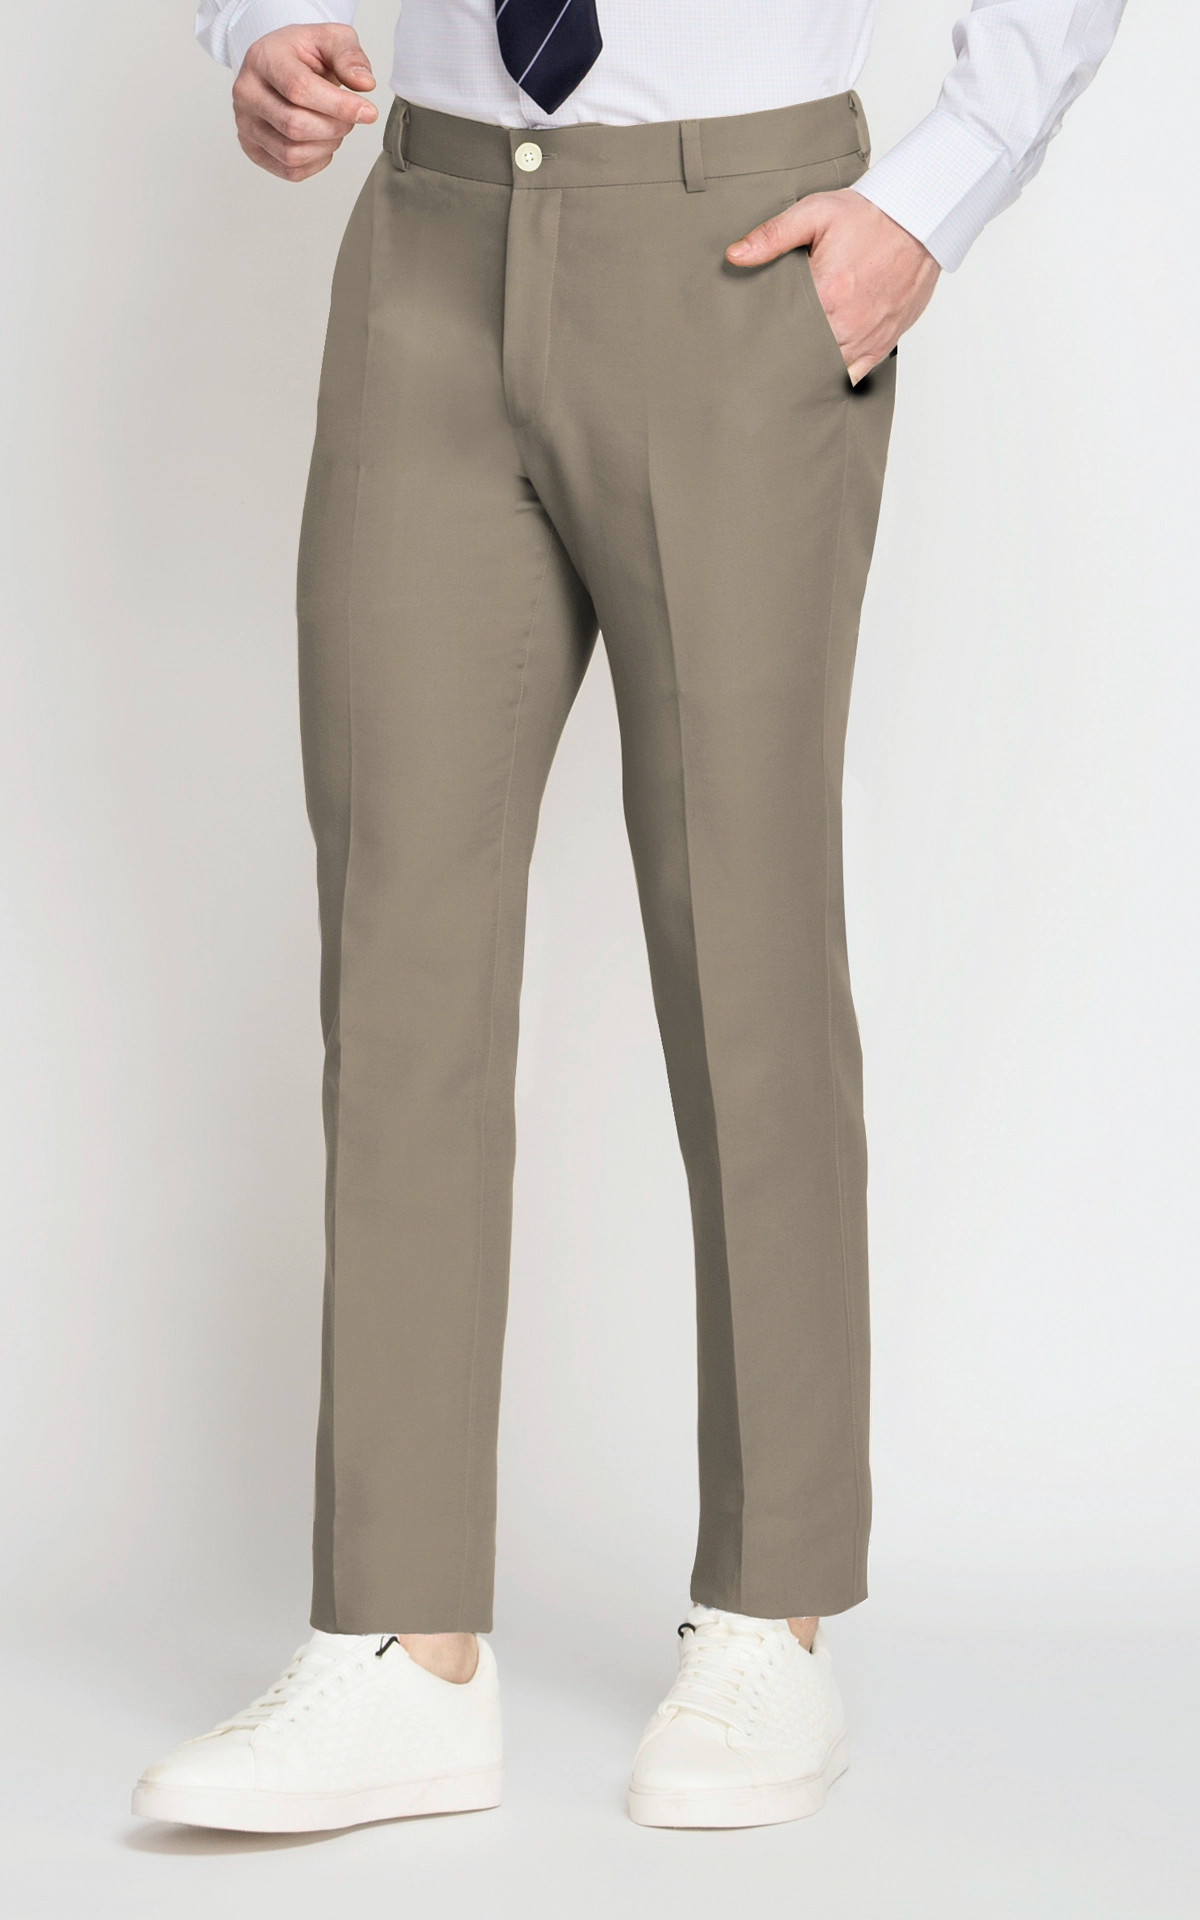 Buy Peter England Khaki Cotton Slim Fit Trousers for Mens Online @ Tata CLiQ